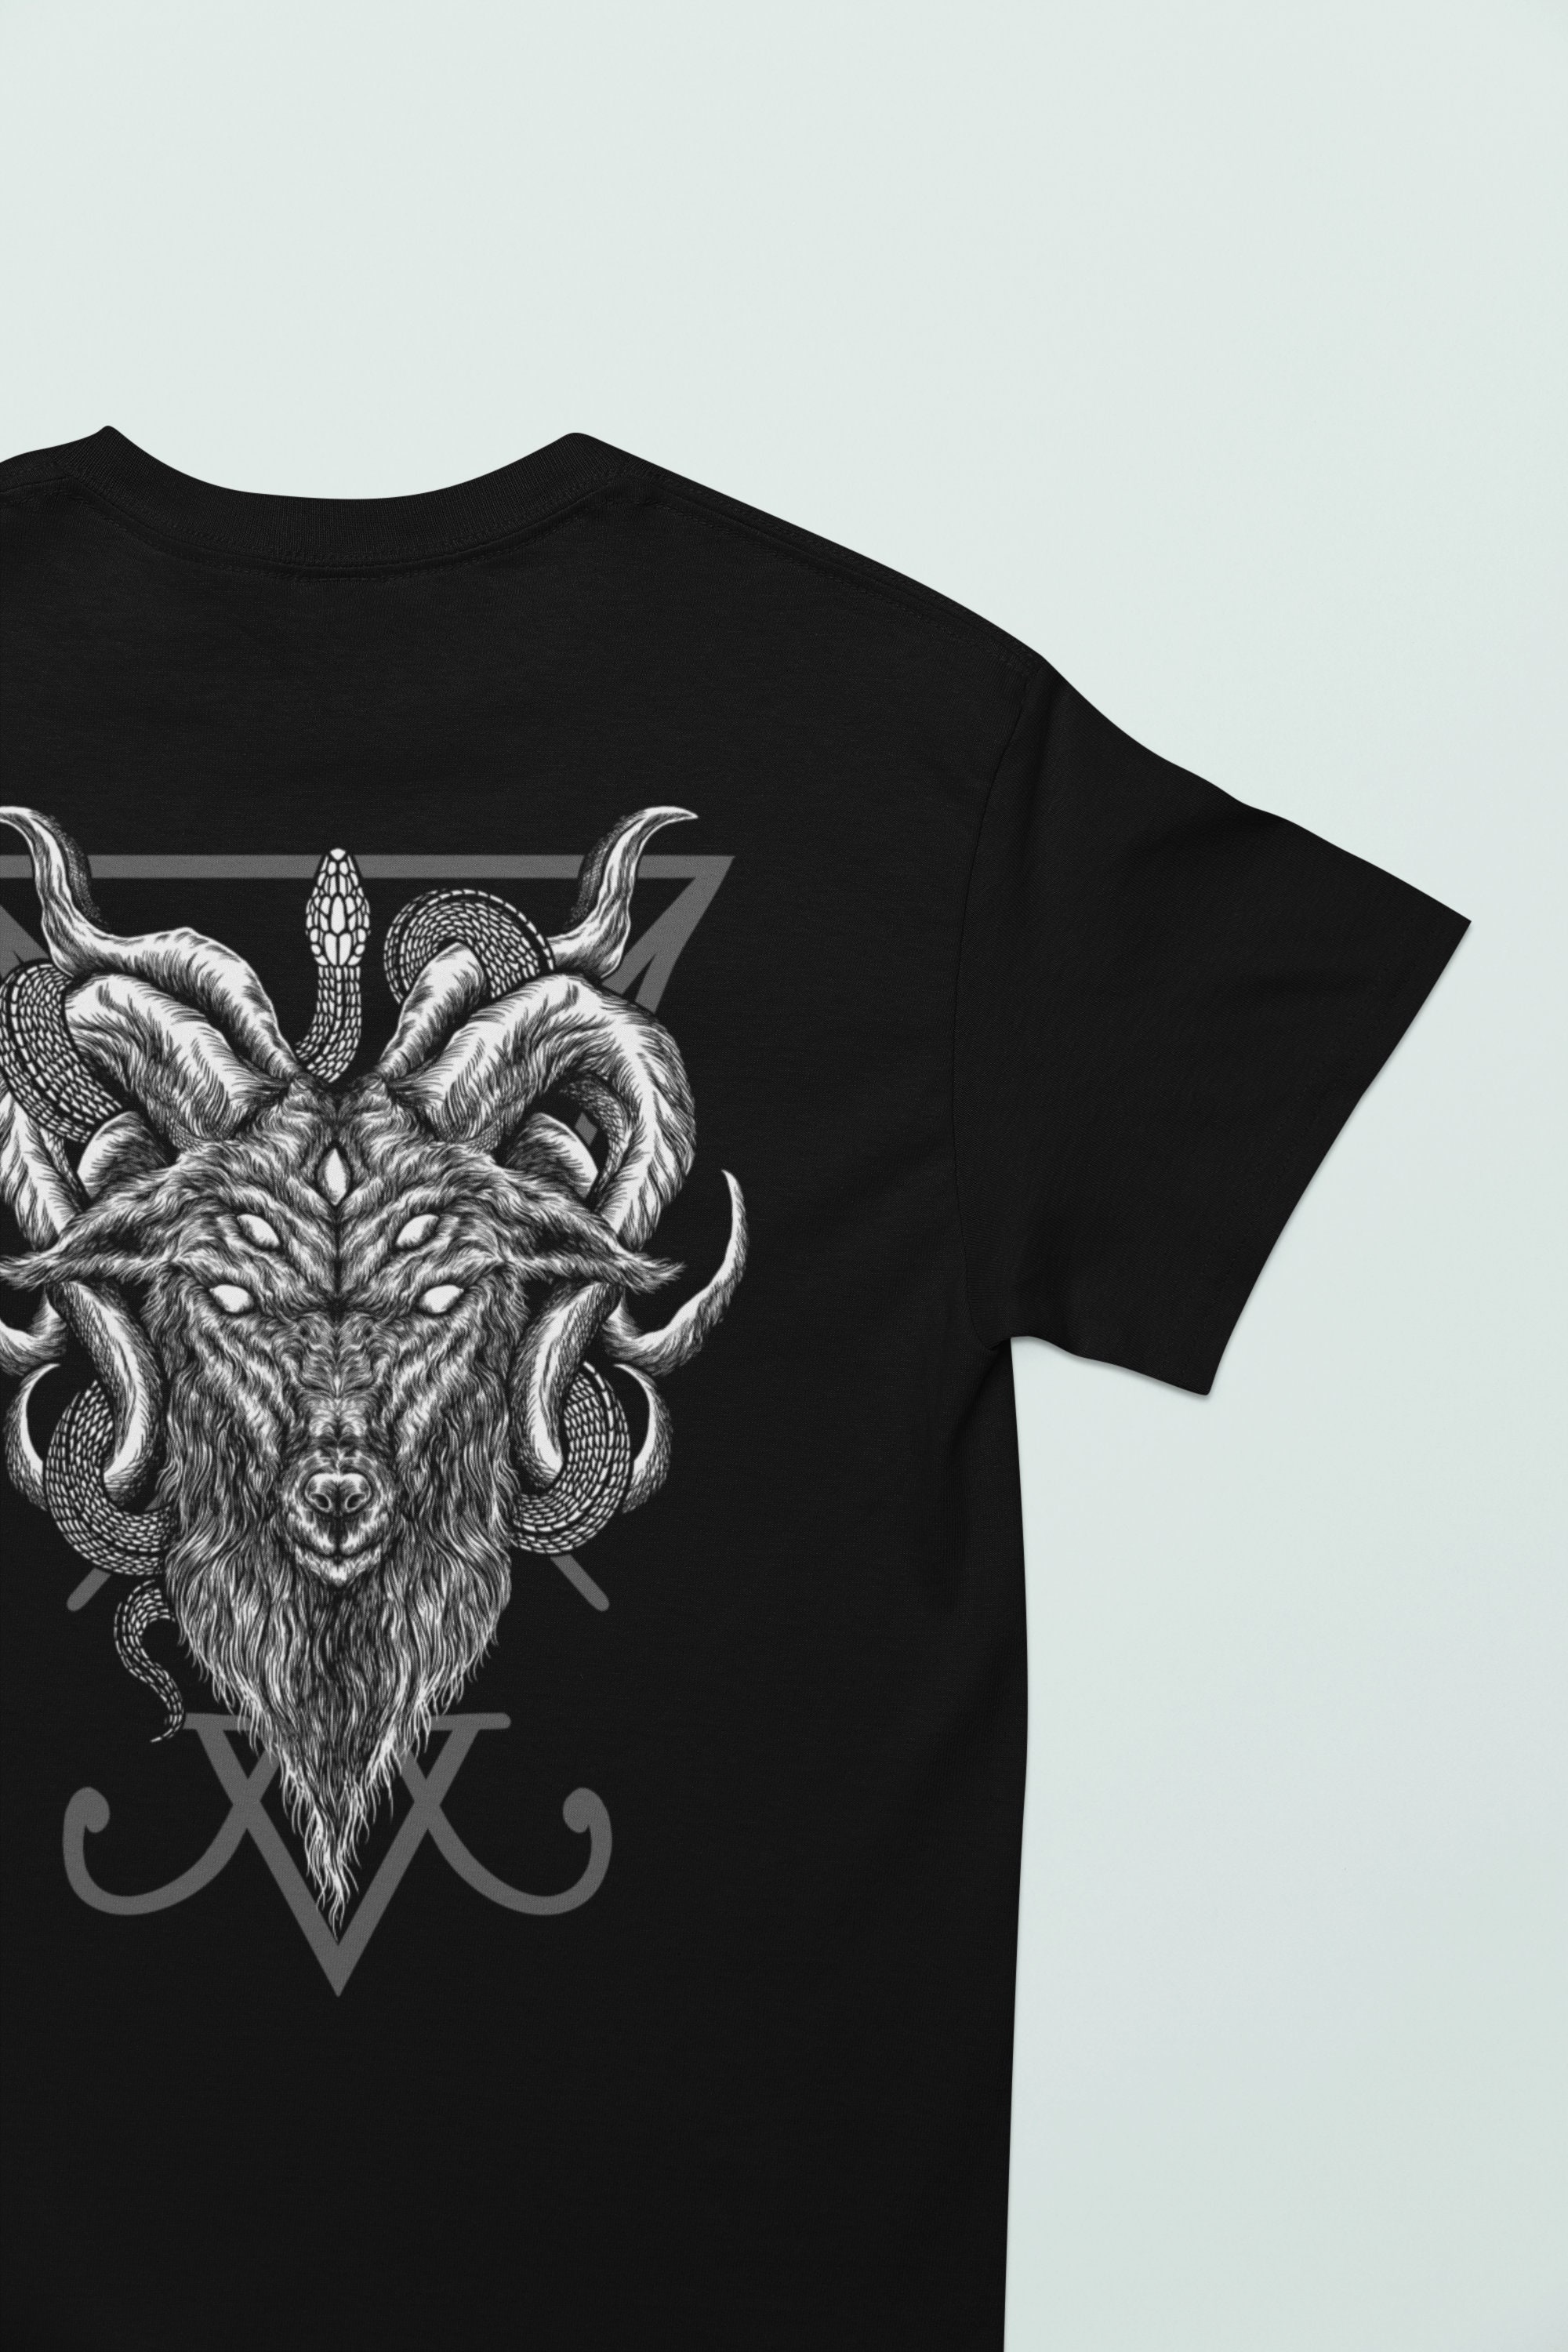 Black Gothic T Shirt 